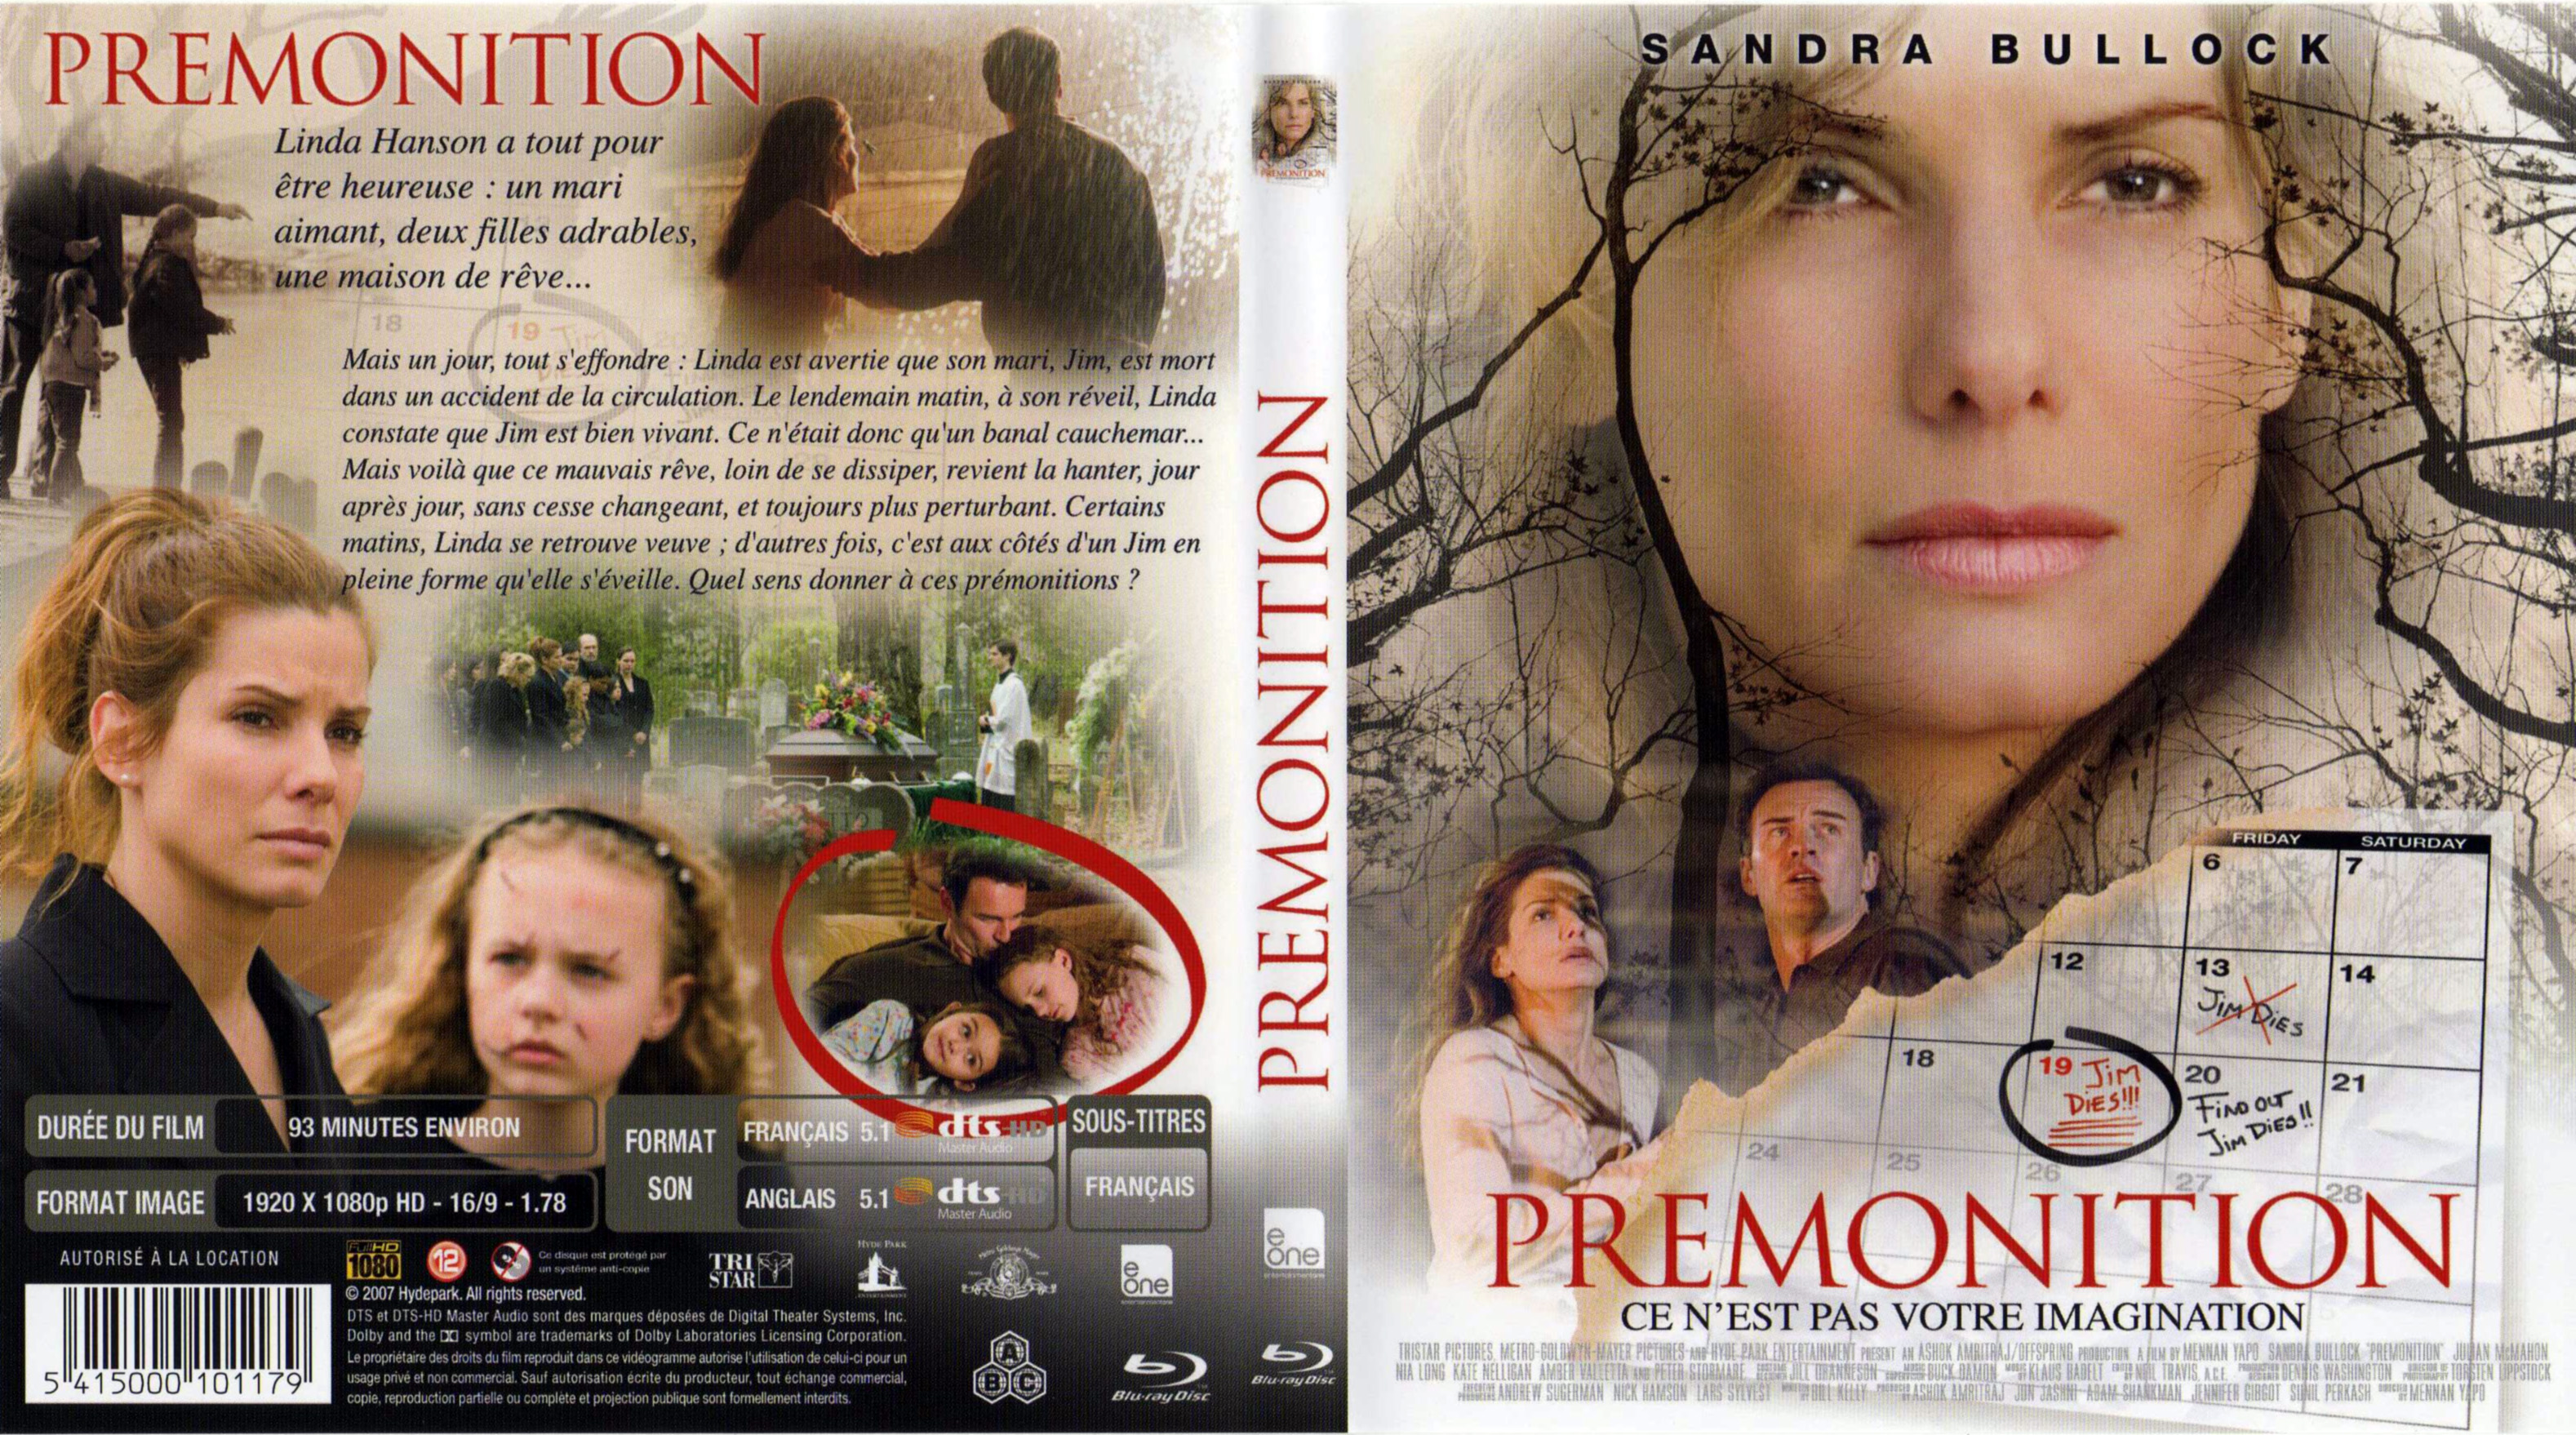 Jaquette DVD Prmonitions (Sandra Bullock) (BLU-RAY)